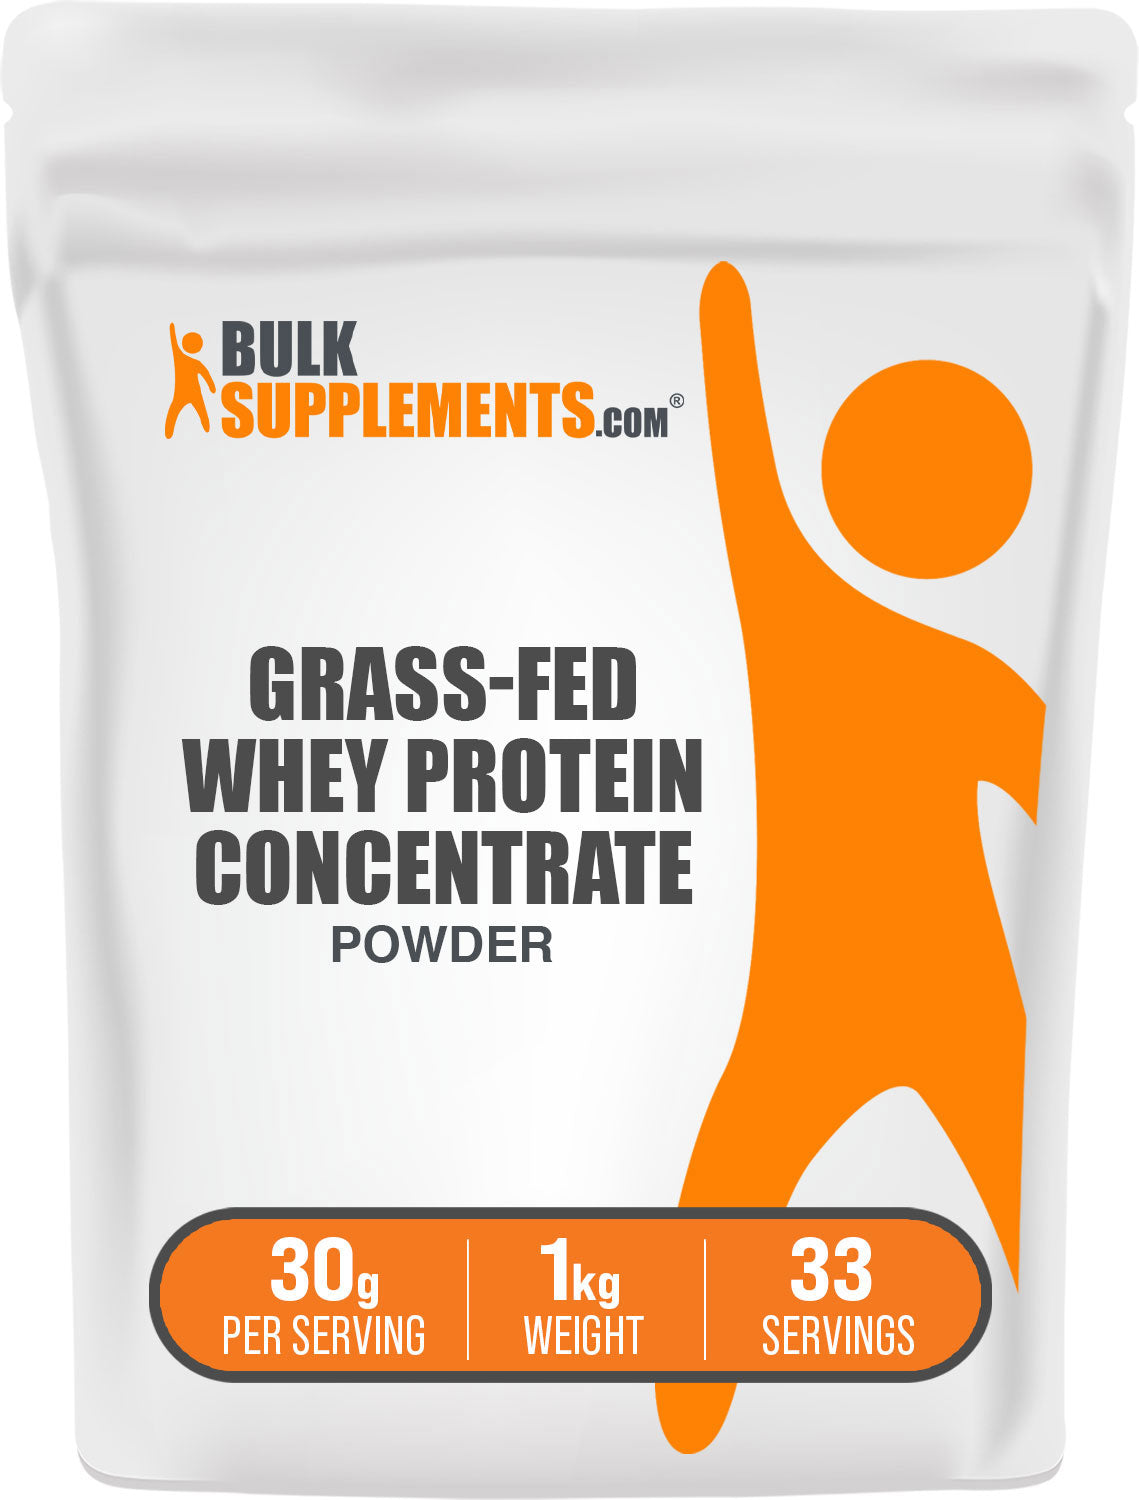 BulkSupplements.com Grass-Fed Whey Protein Powder 1kg Bag